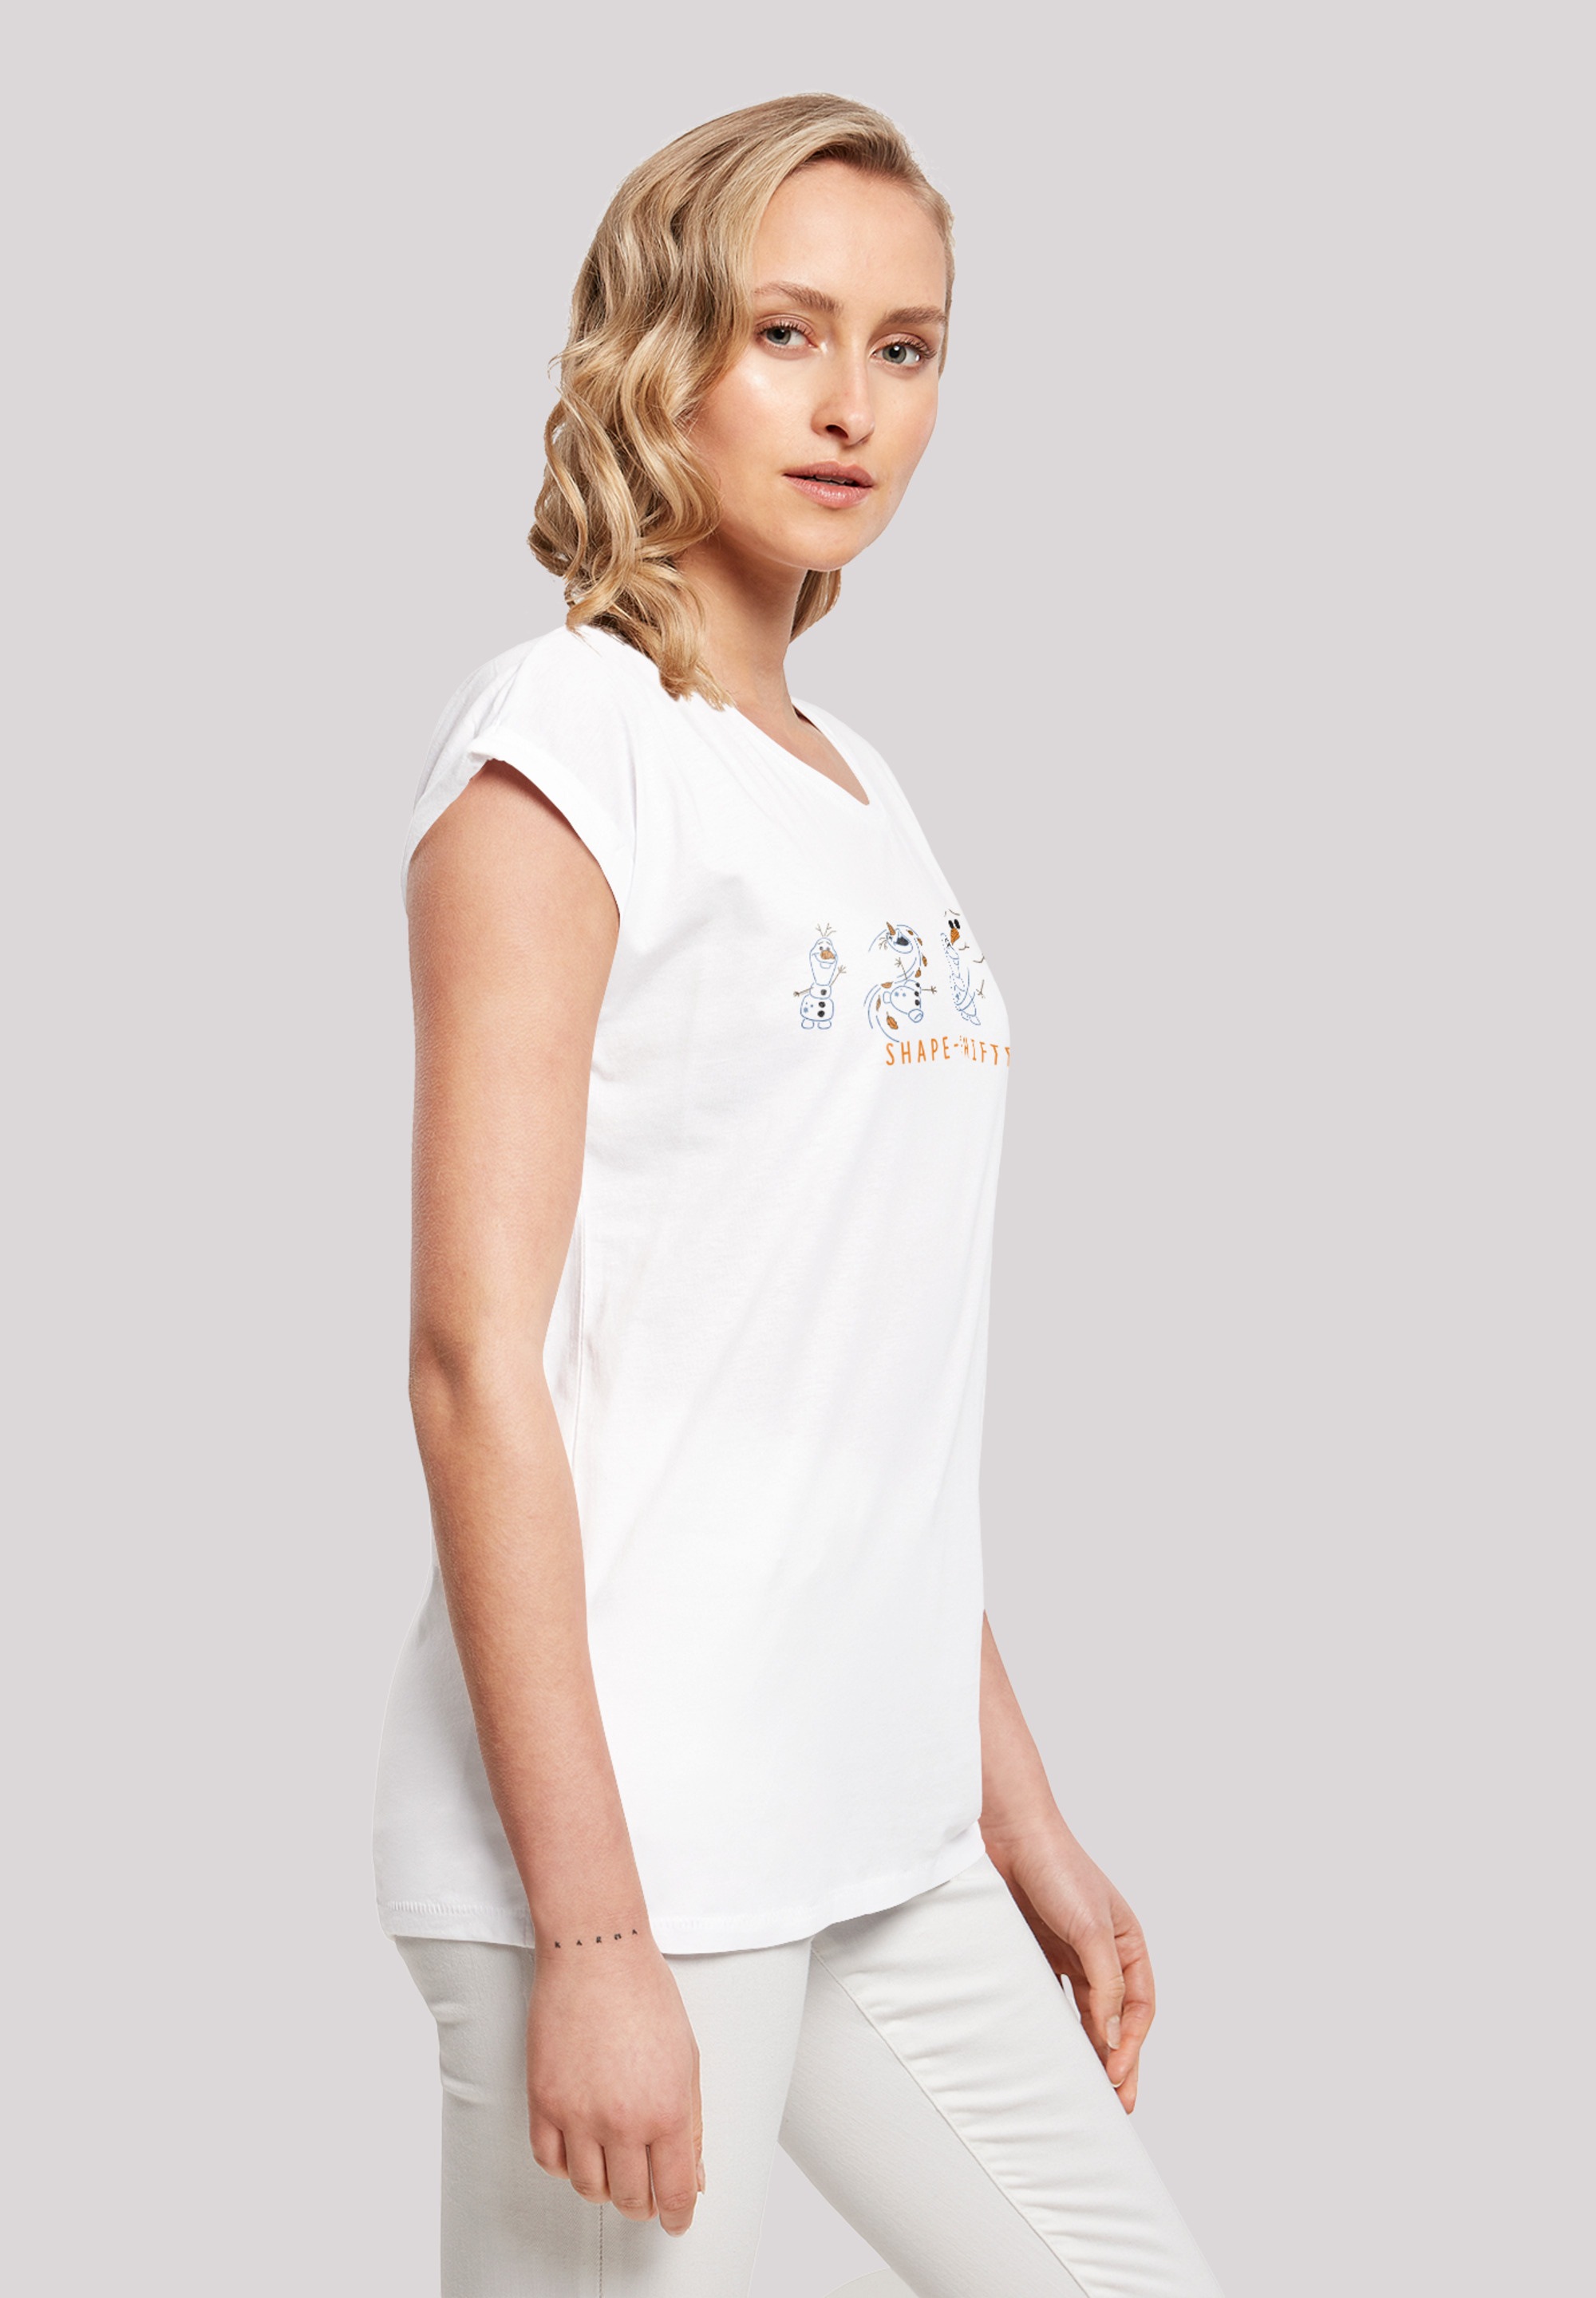 Olaf | F4NT4STIC bestellen »Disney 2 T-Shirt Print für Shape-Shifter«, Frozen BAUR